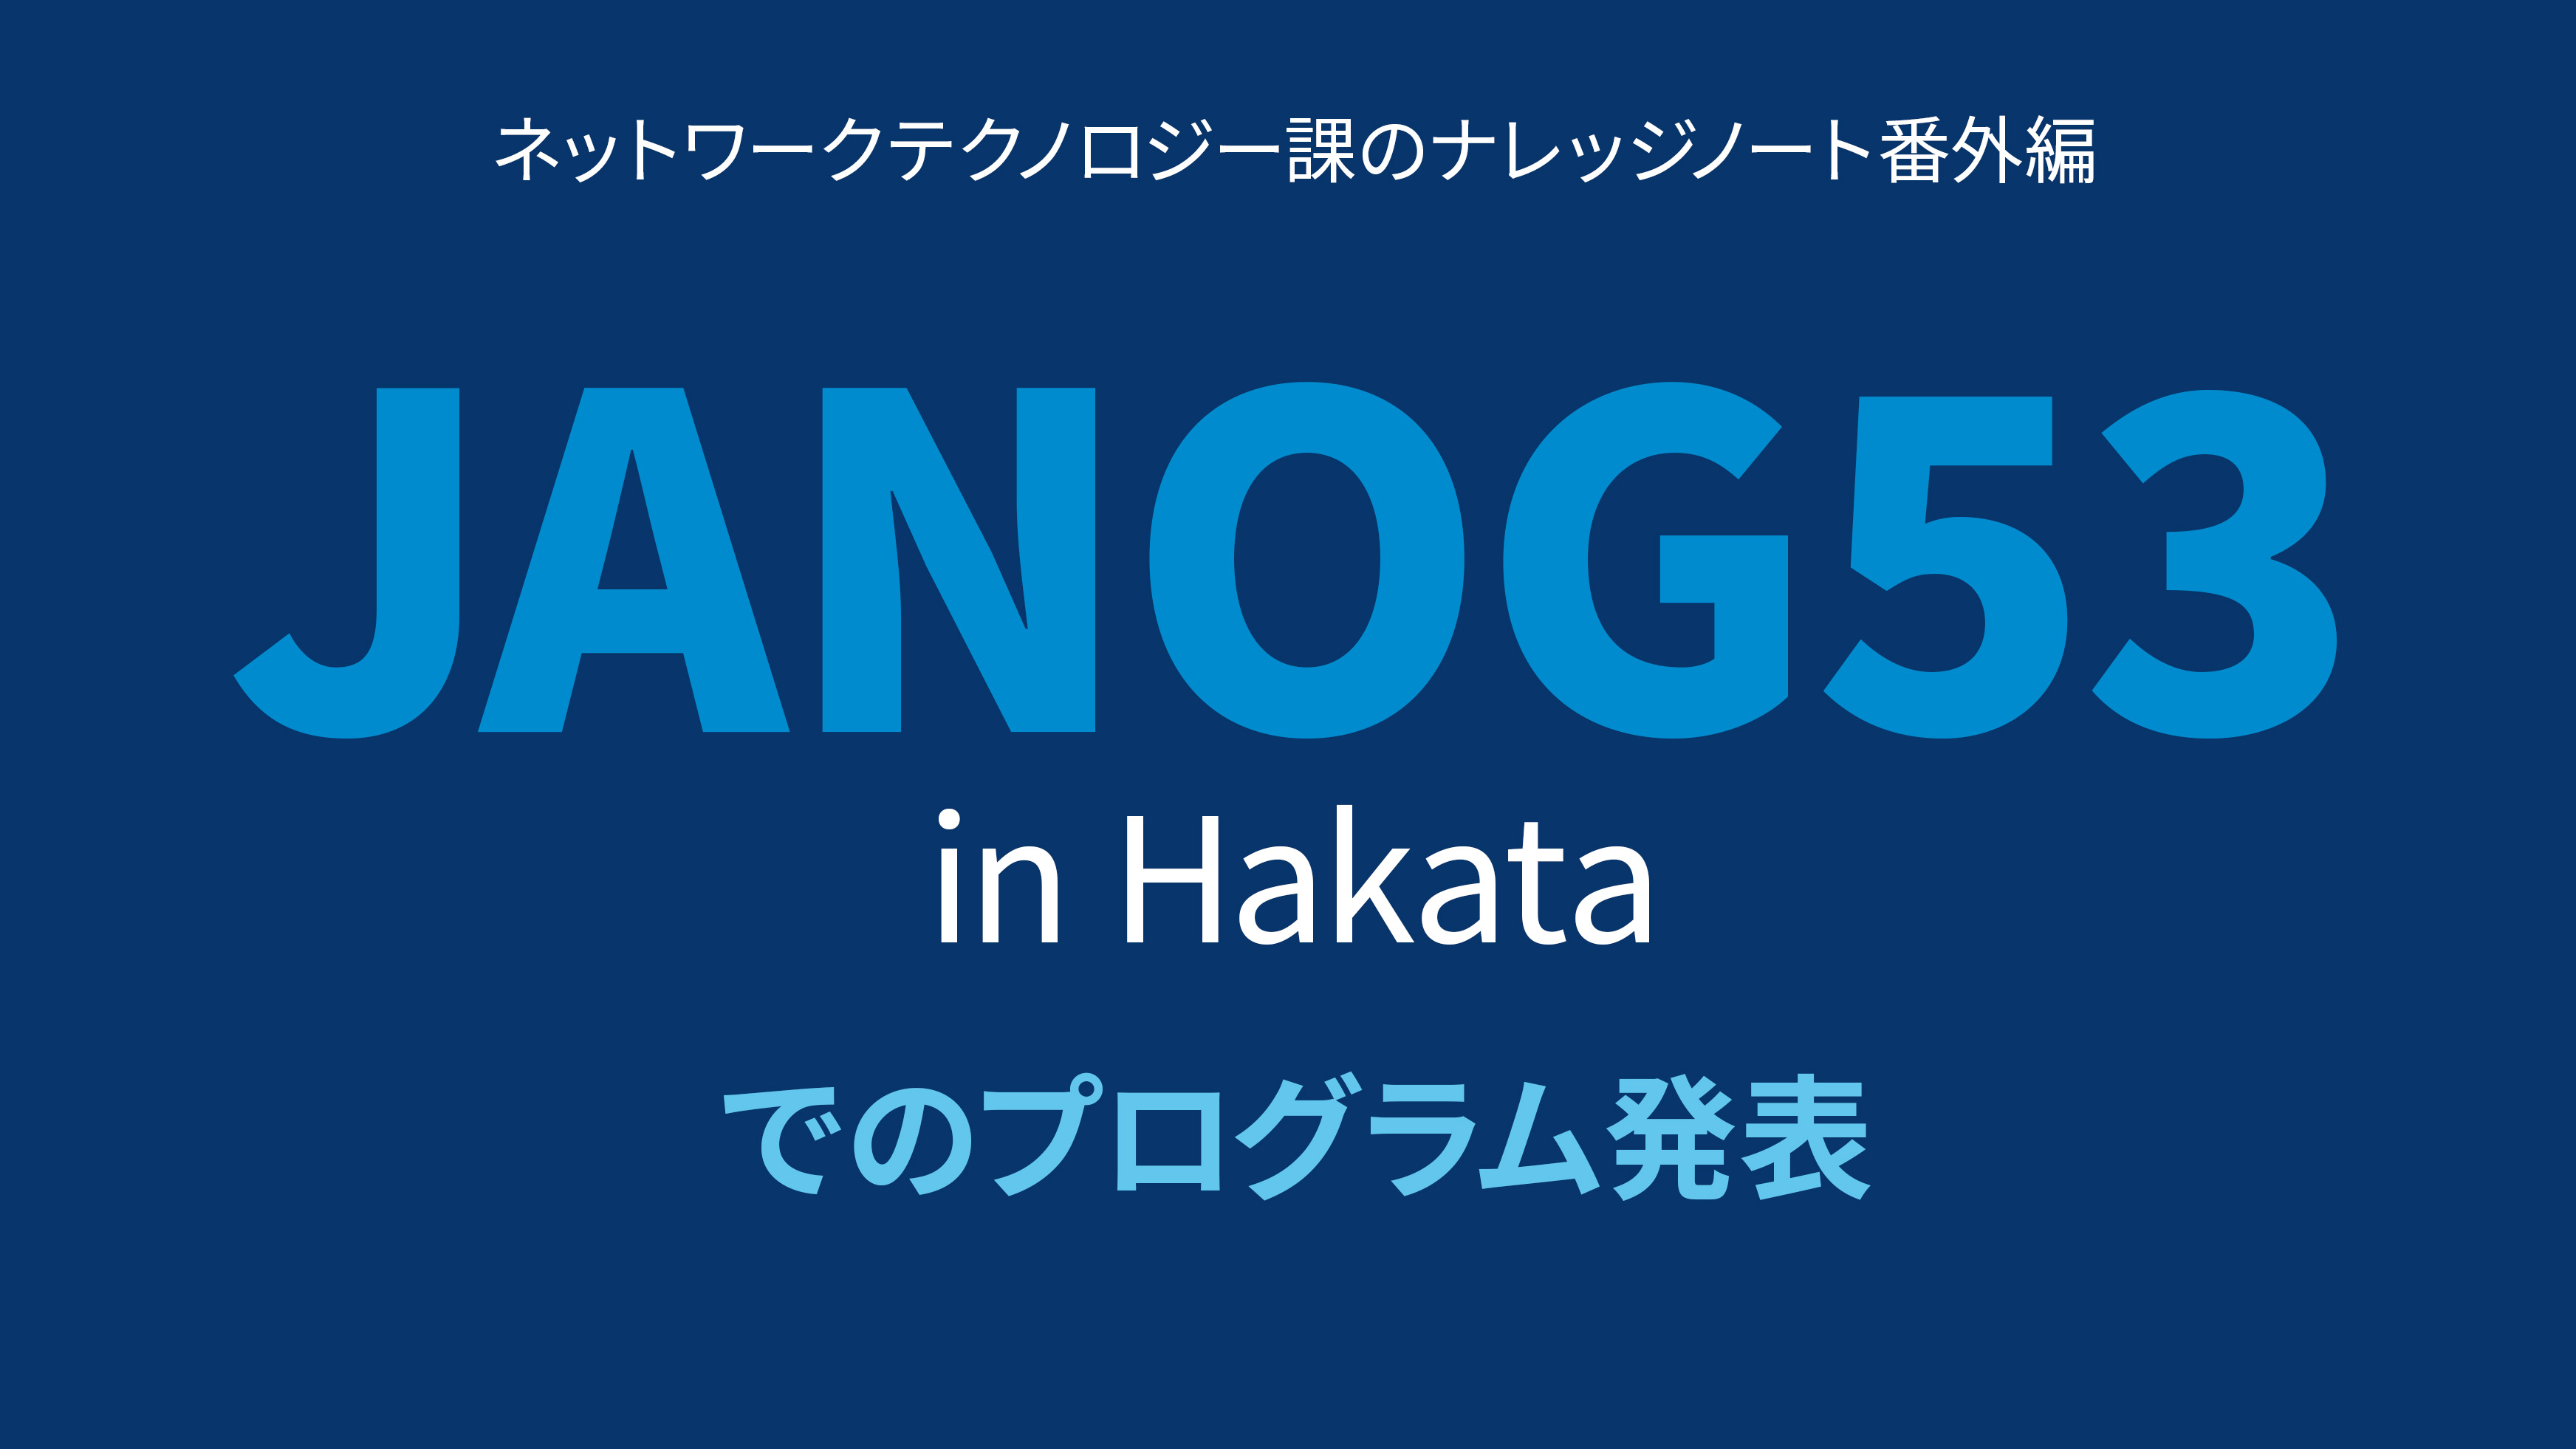 JANOG53 Meeting in Hakata」でのプログラム発表